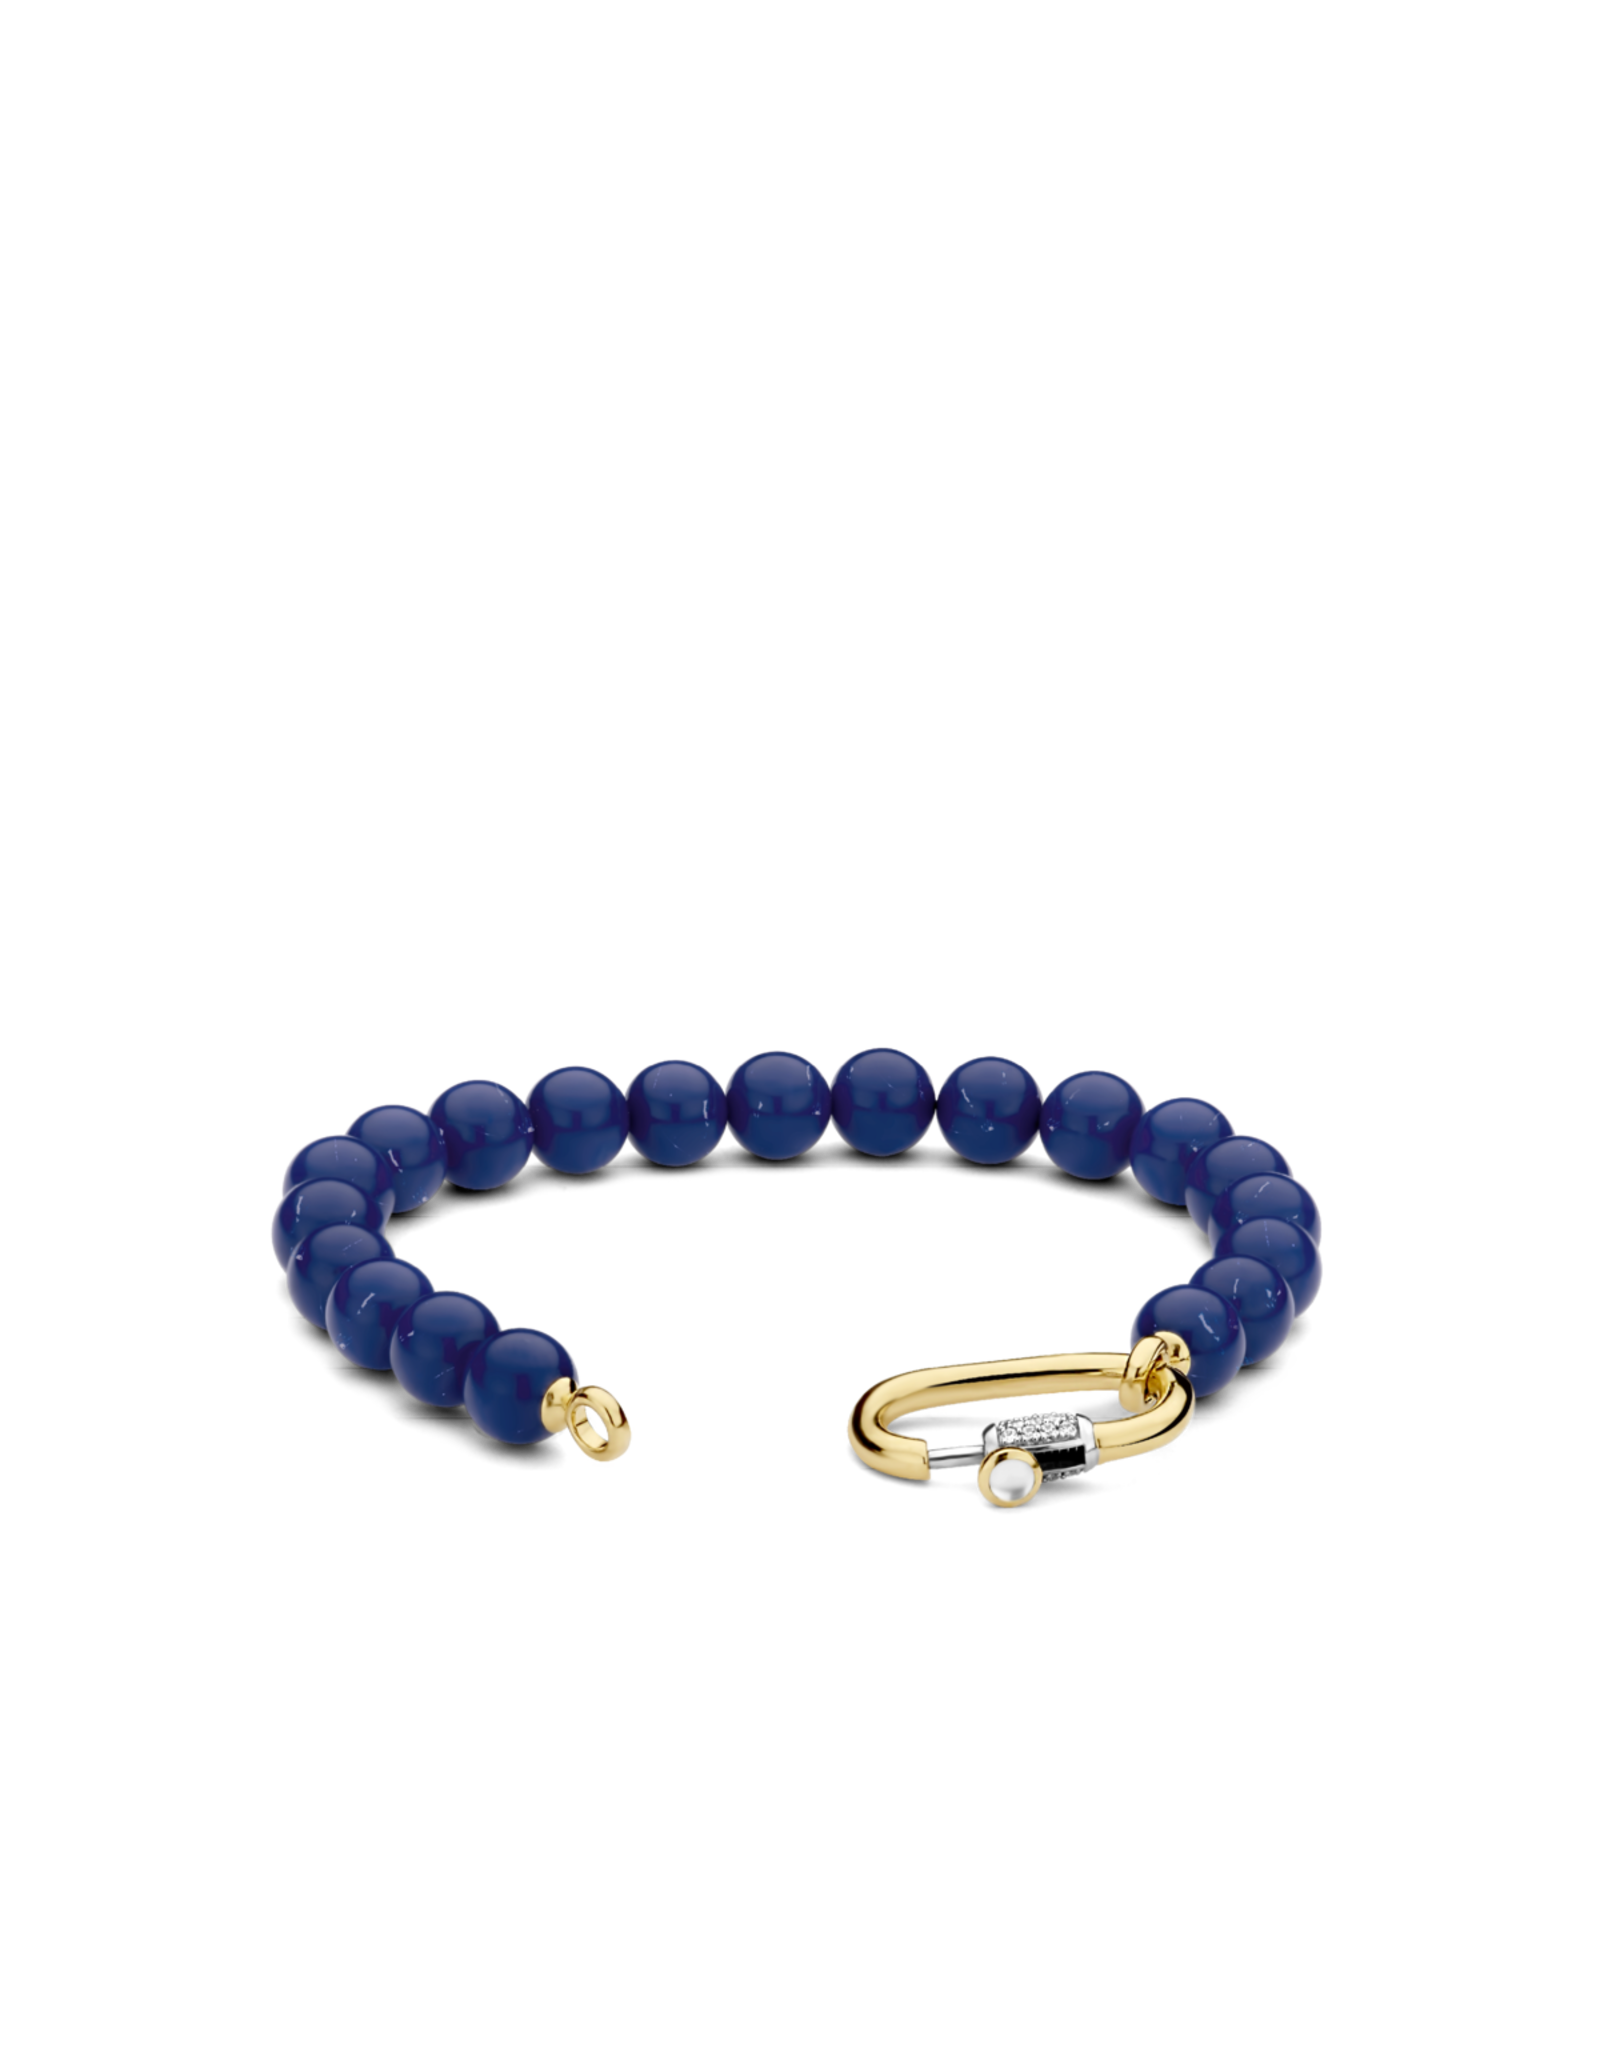 Lapis Blue Beaded Bracelet with Golden Clasp- 2961BL